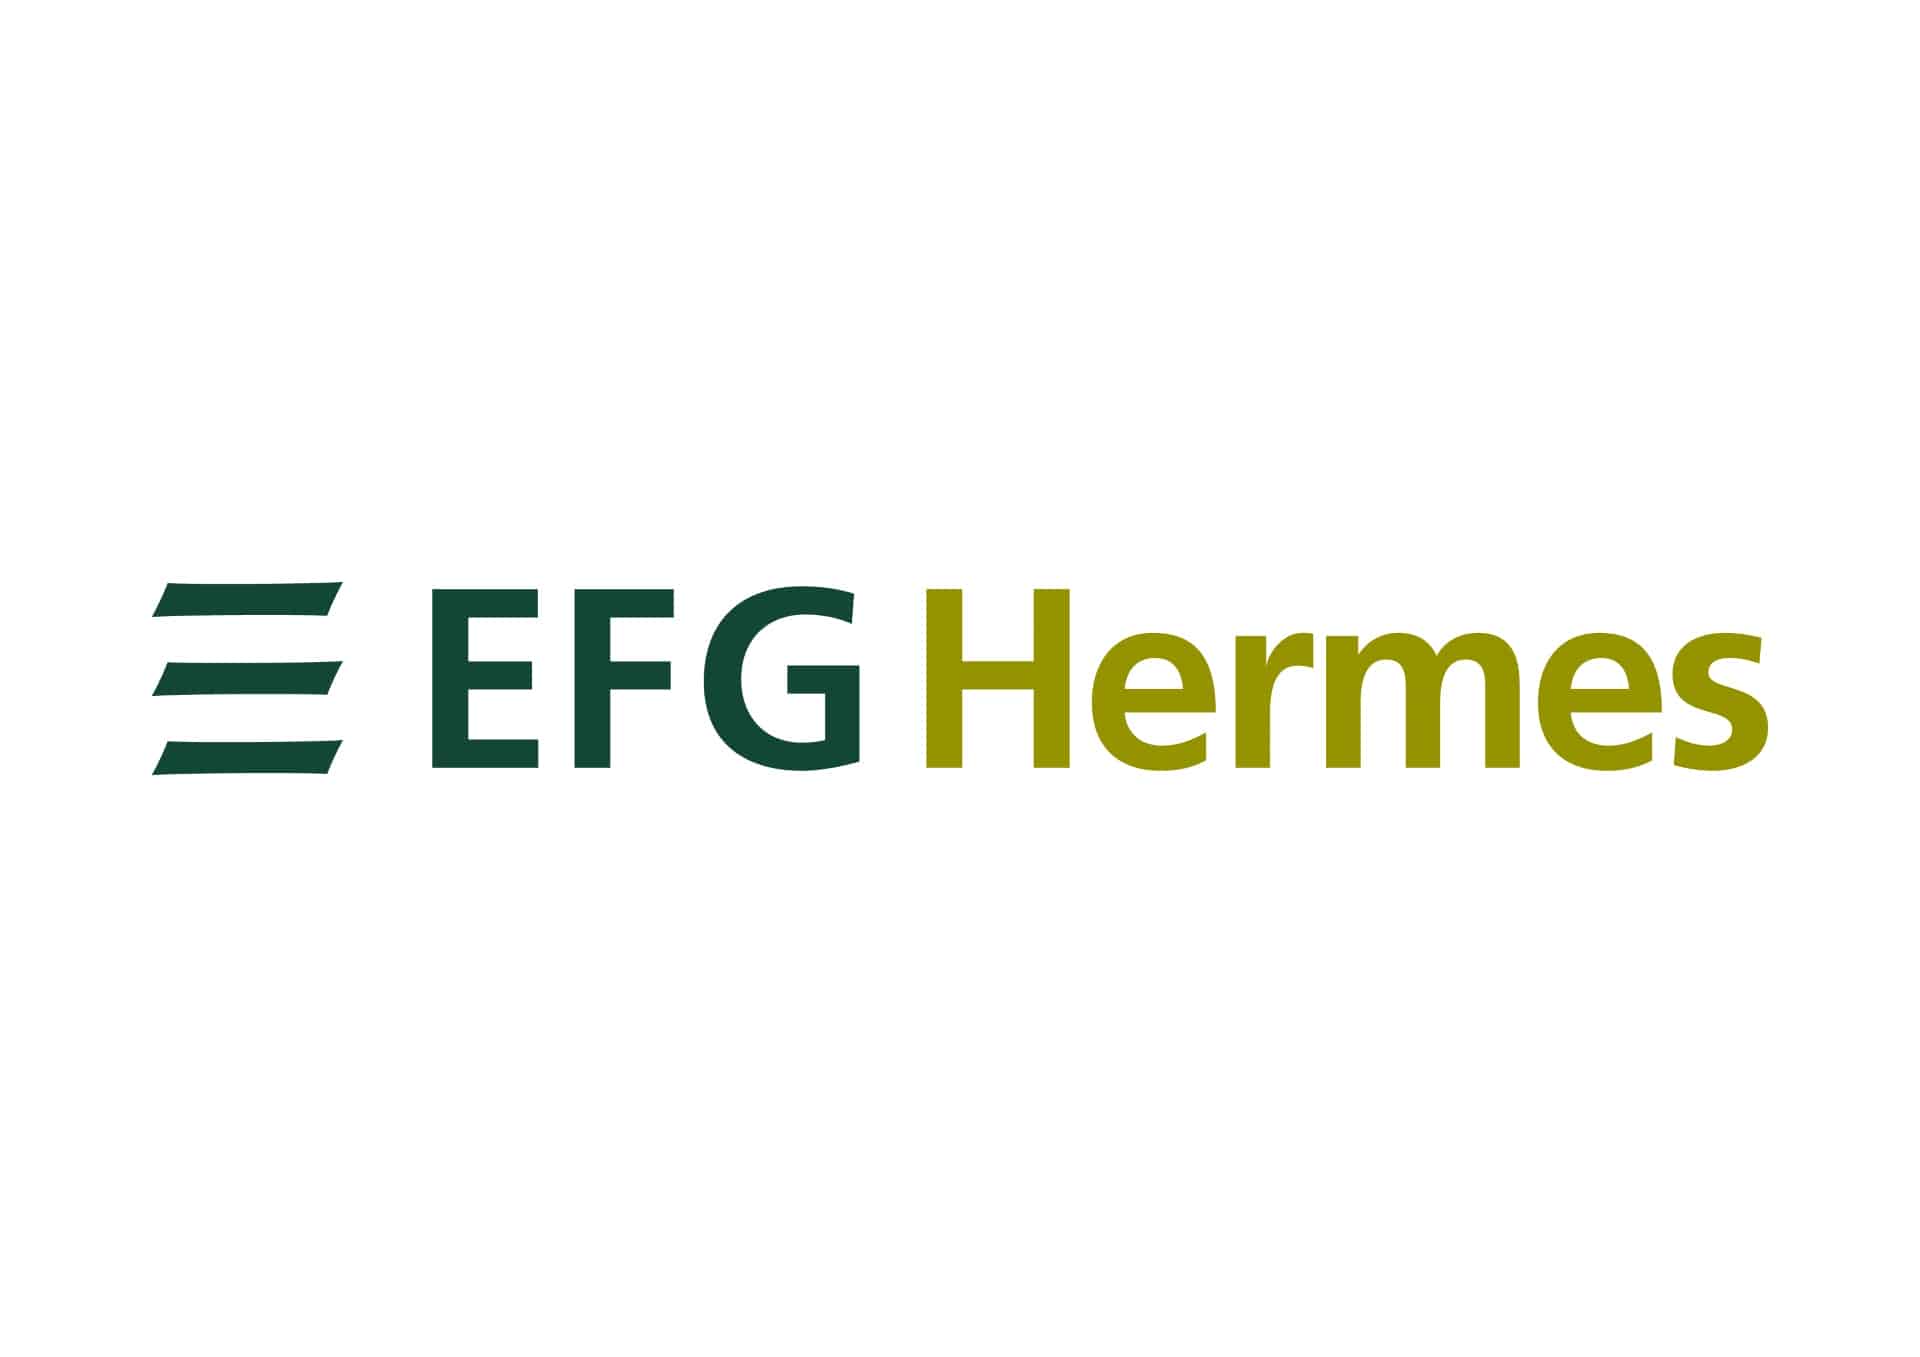 EFG Hermes advises on FCG's $764M IPO on Saudi Exchange

